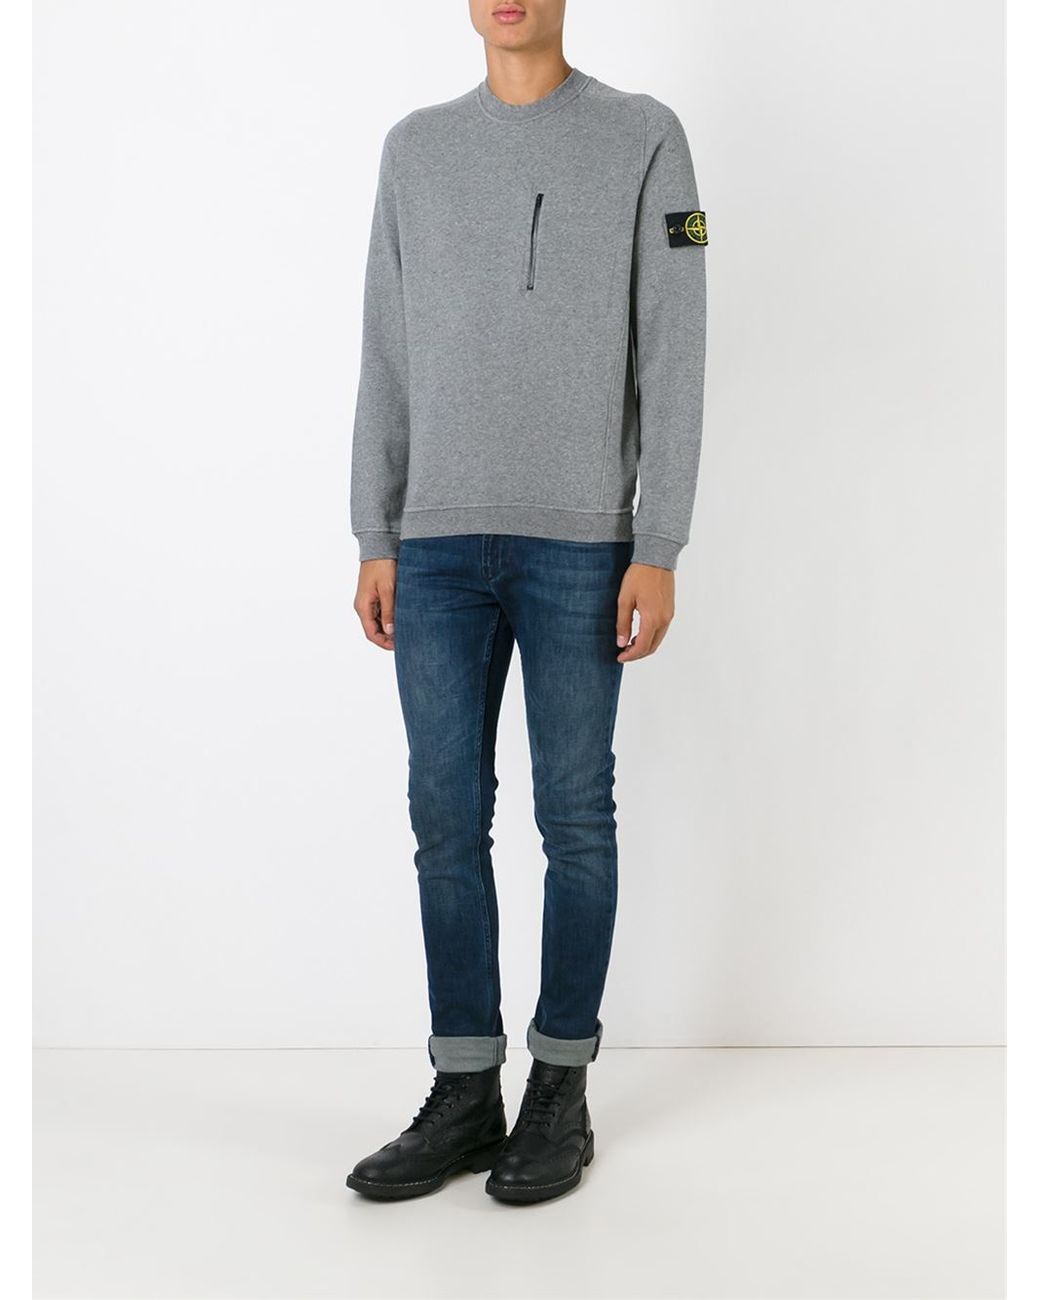 Stone Island Zip Chest Pocket Sweatshirt in Grey (Gray) for Men | Lyst